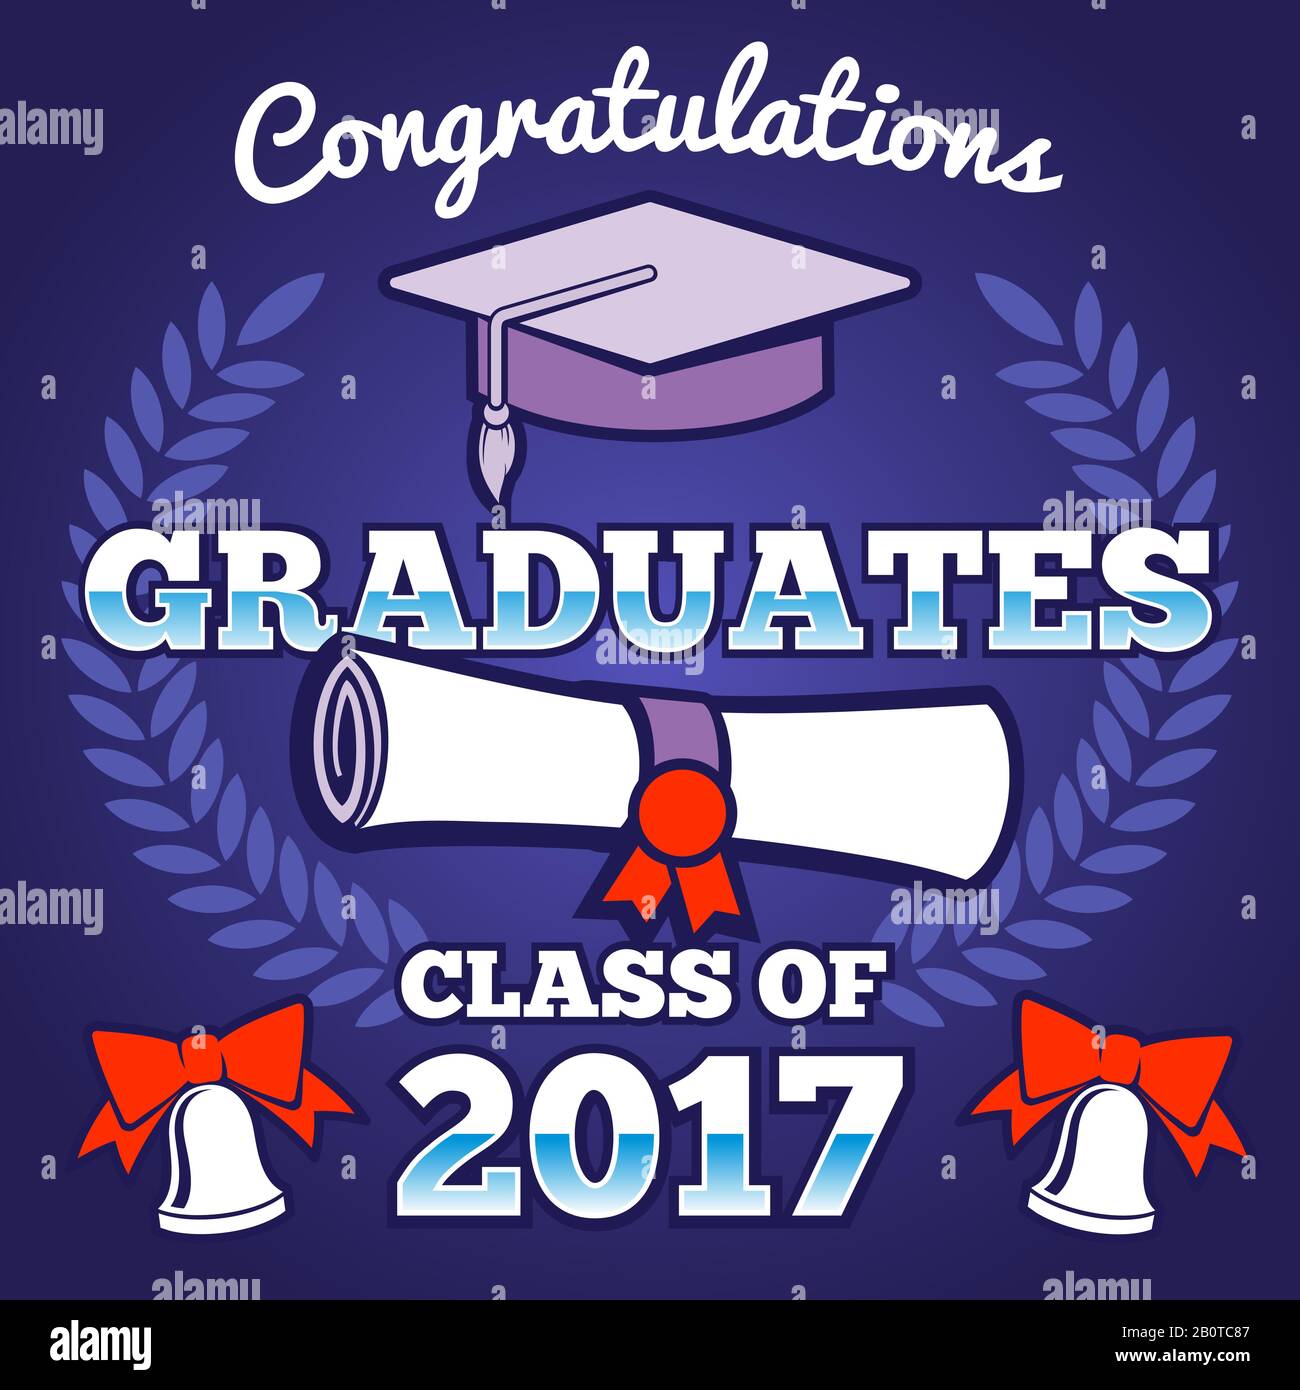 Congratulations Banner Graduation